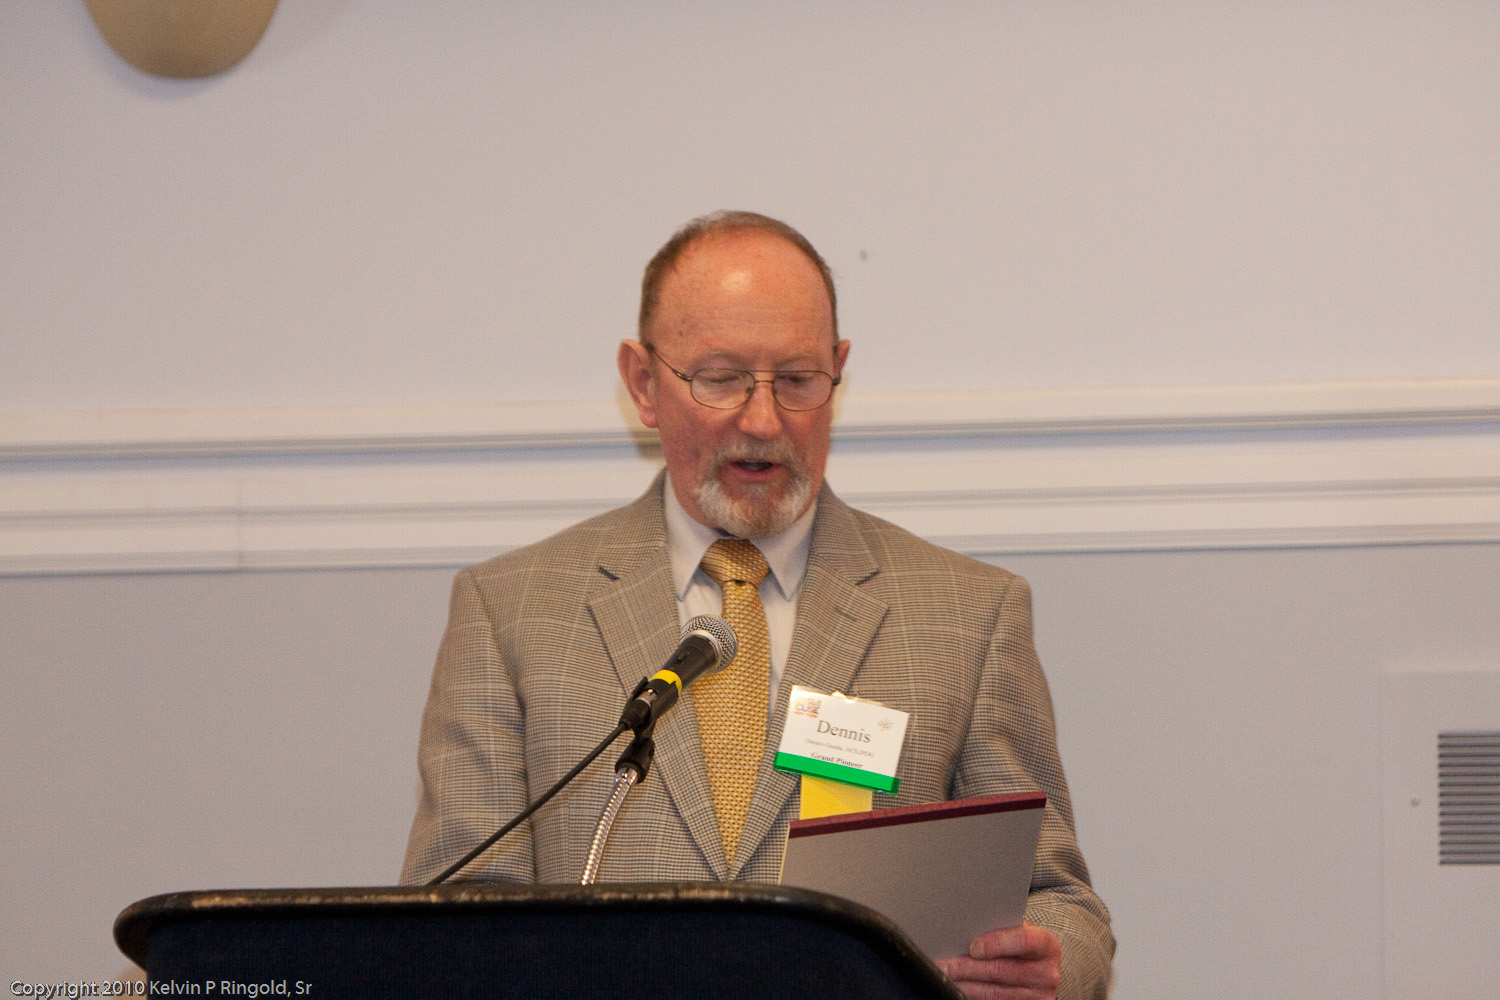 a man wearing a gray suit is giving a speech